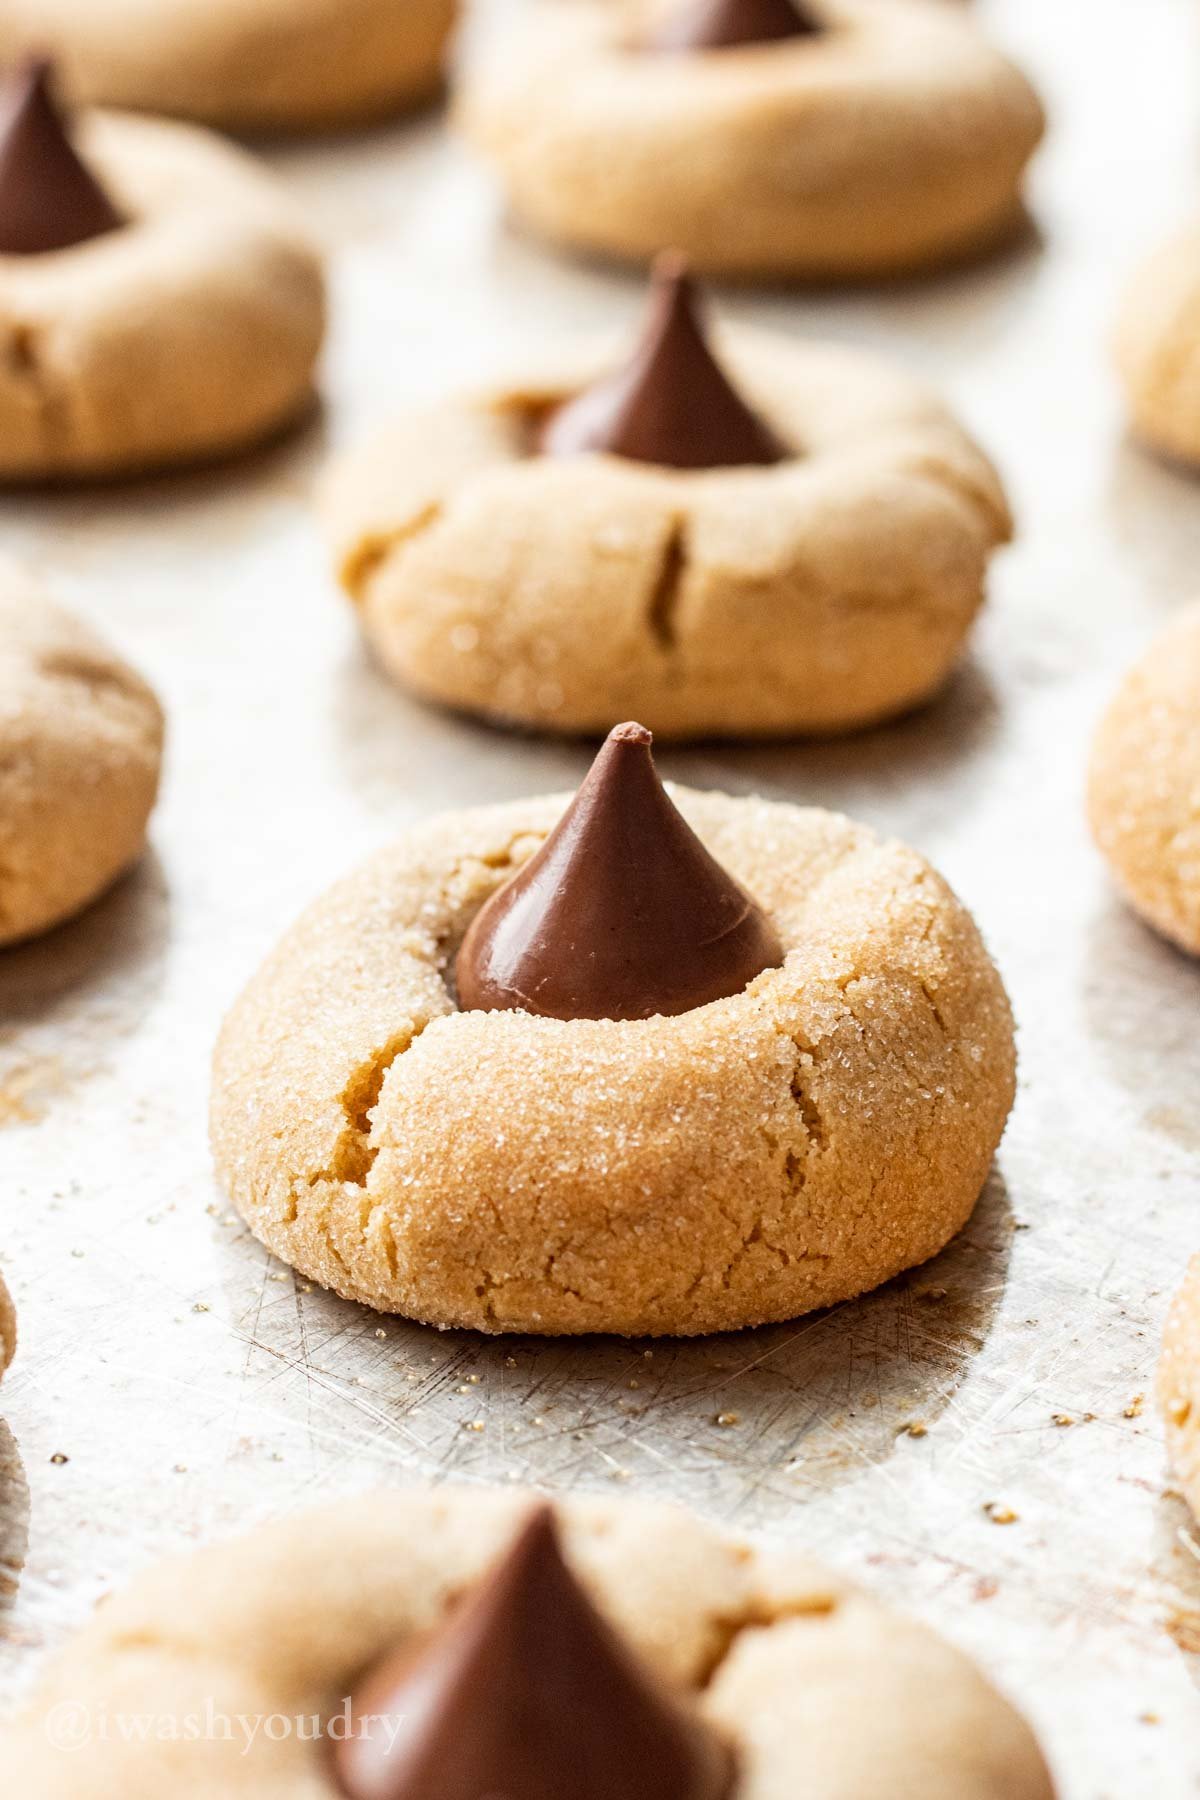 https://iwashyoudry.com/wp-content/uploads/2022/09/Peanut-Butter-Kiss-Cookies-Baked-center.jpg